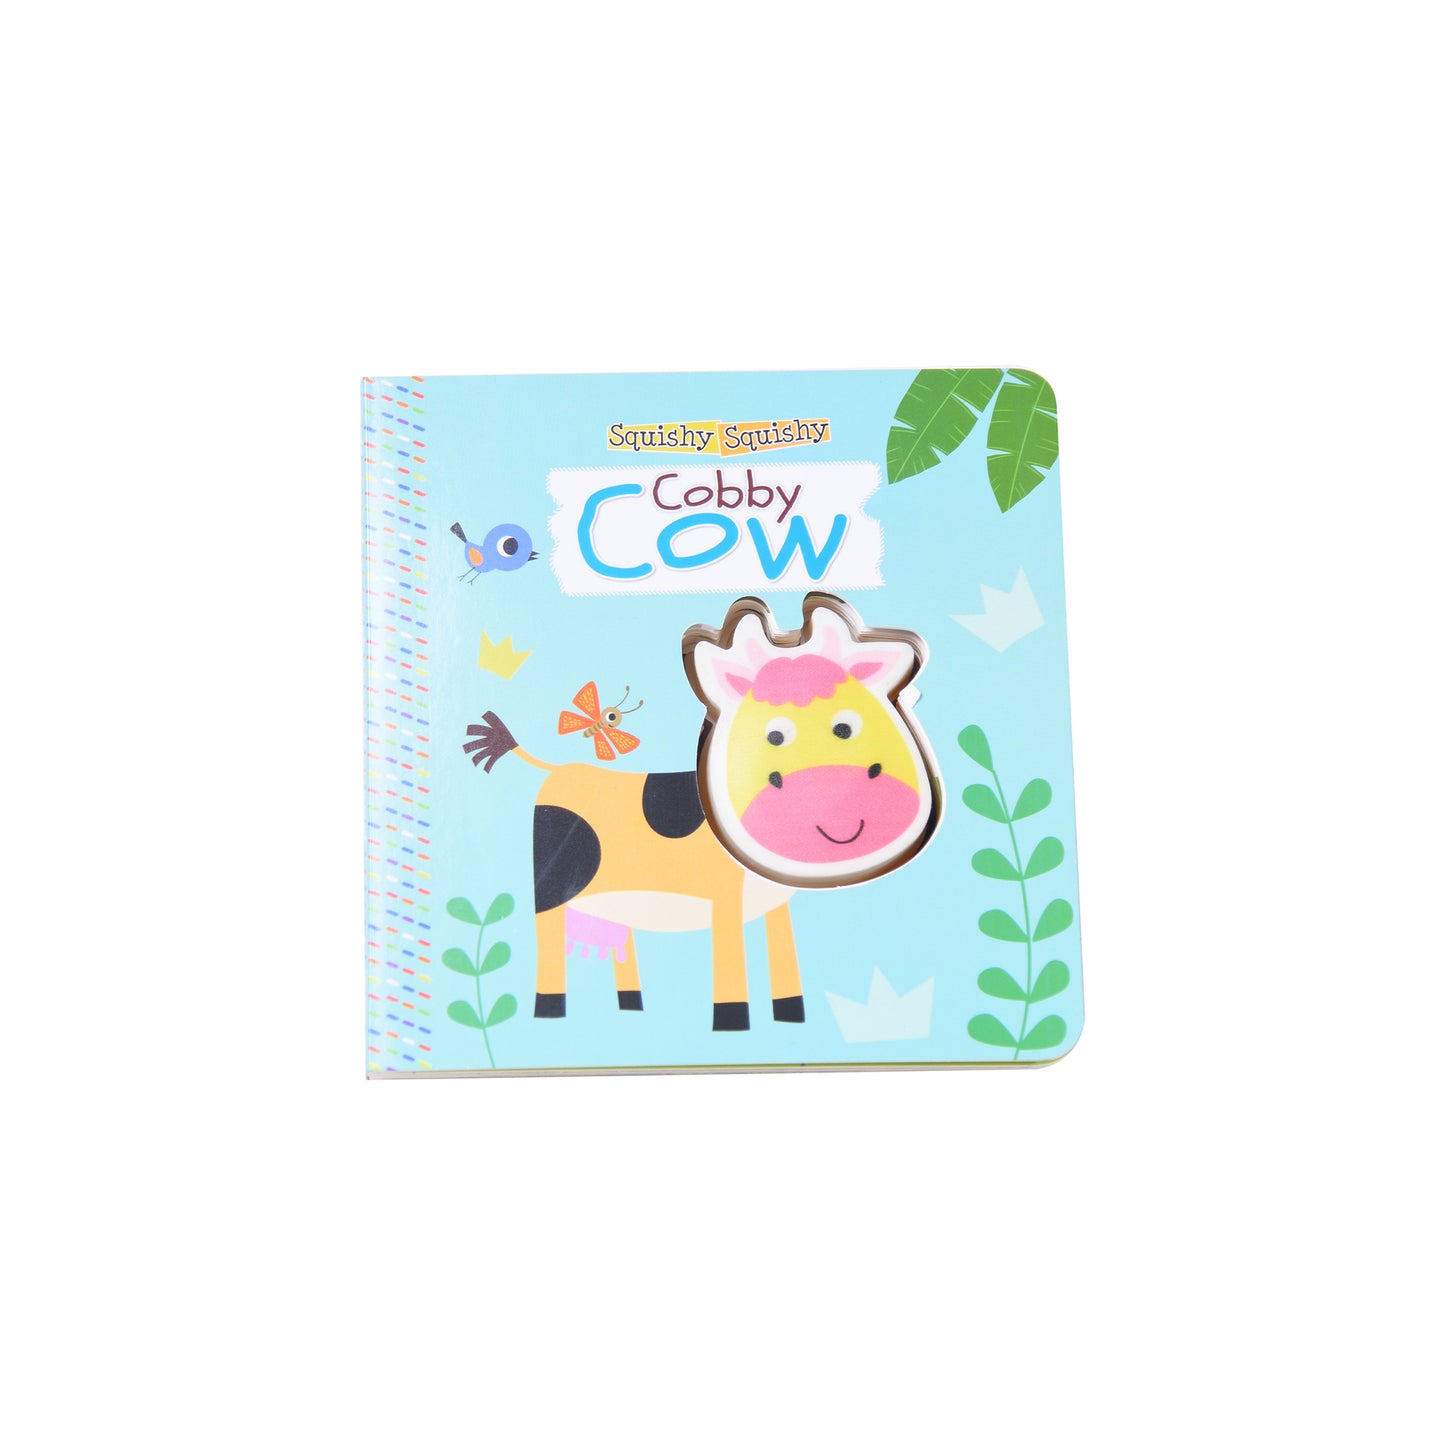 Squishy Squishy- Cobby cow